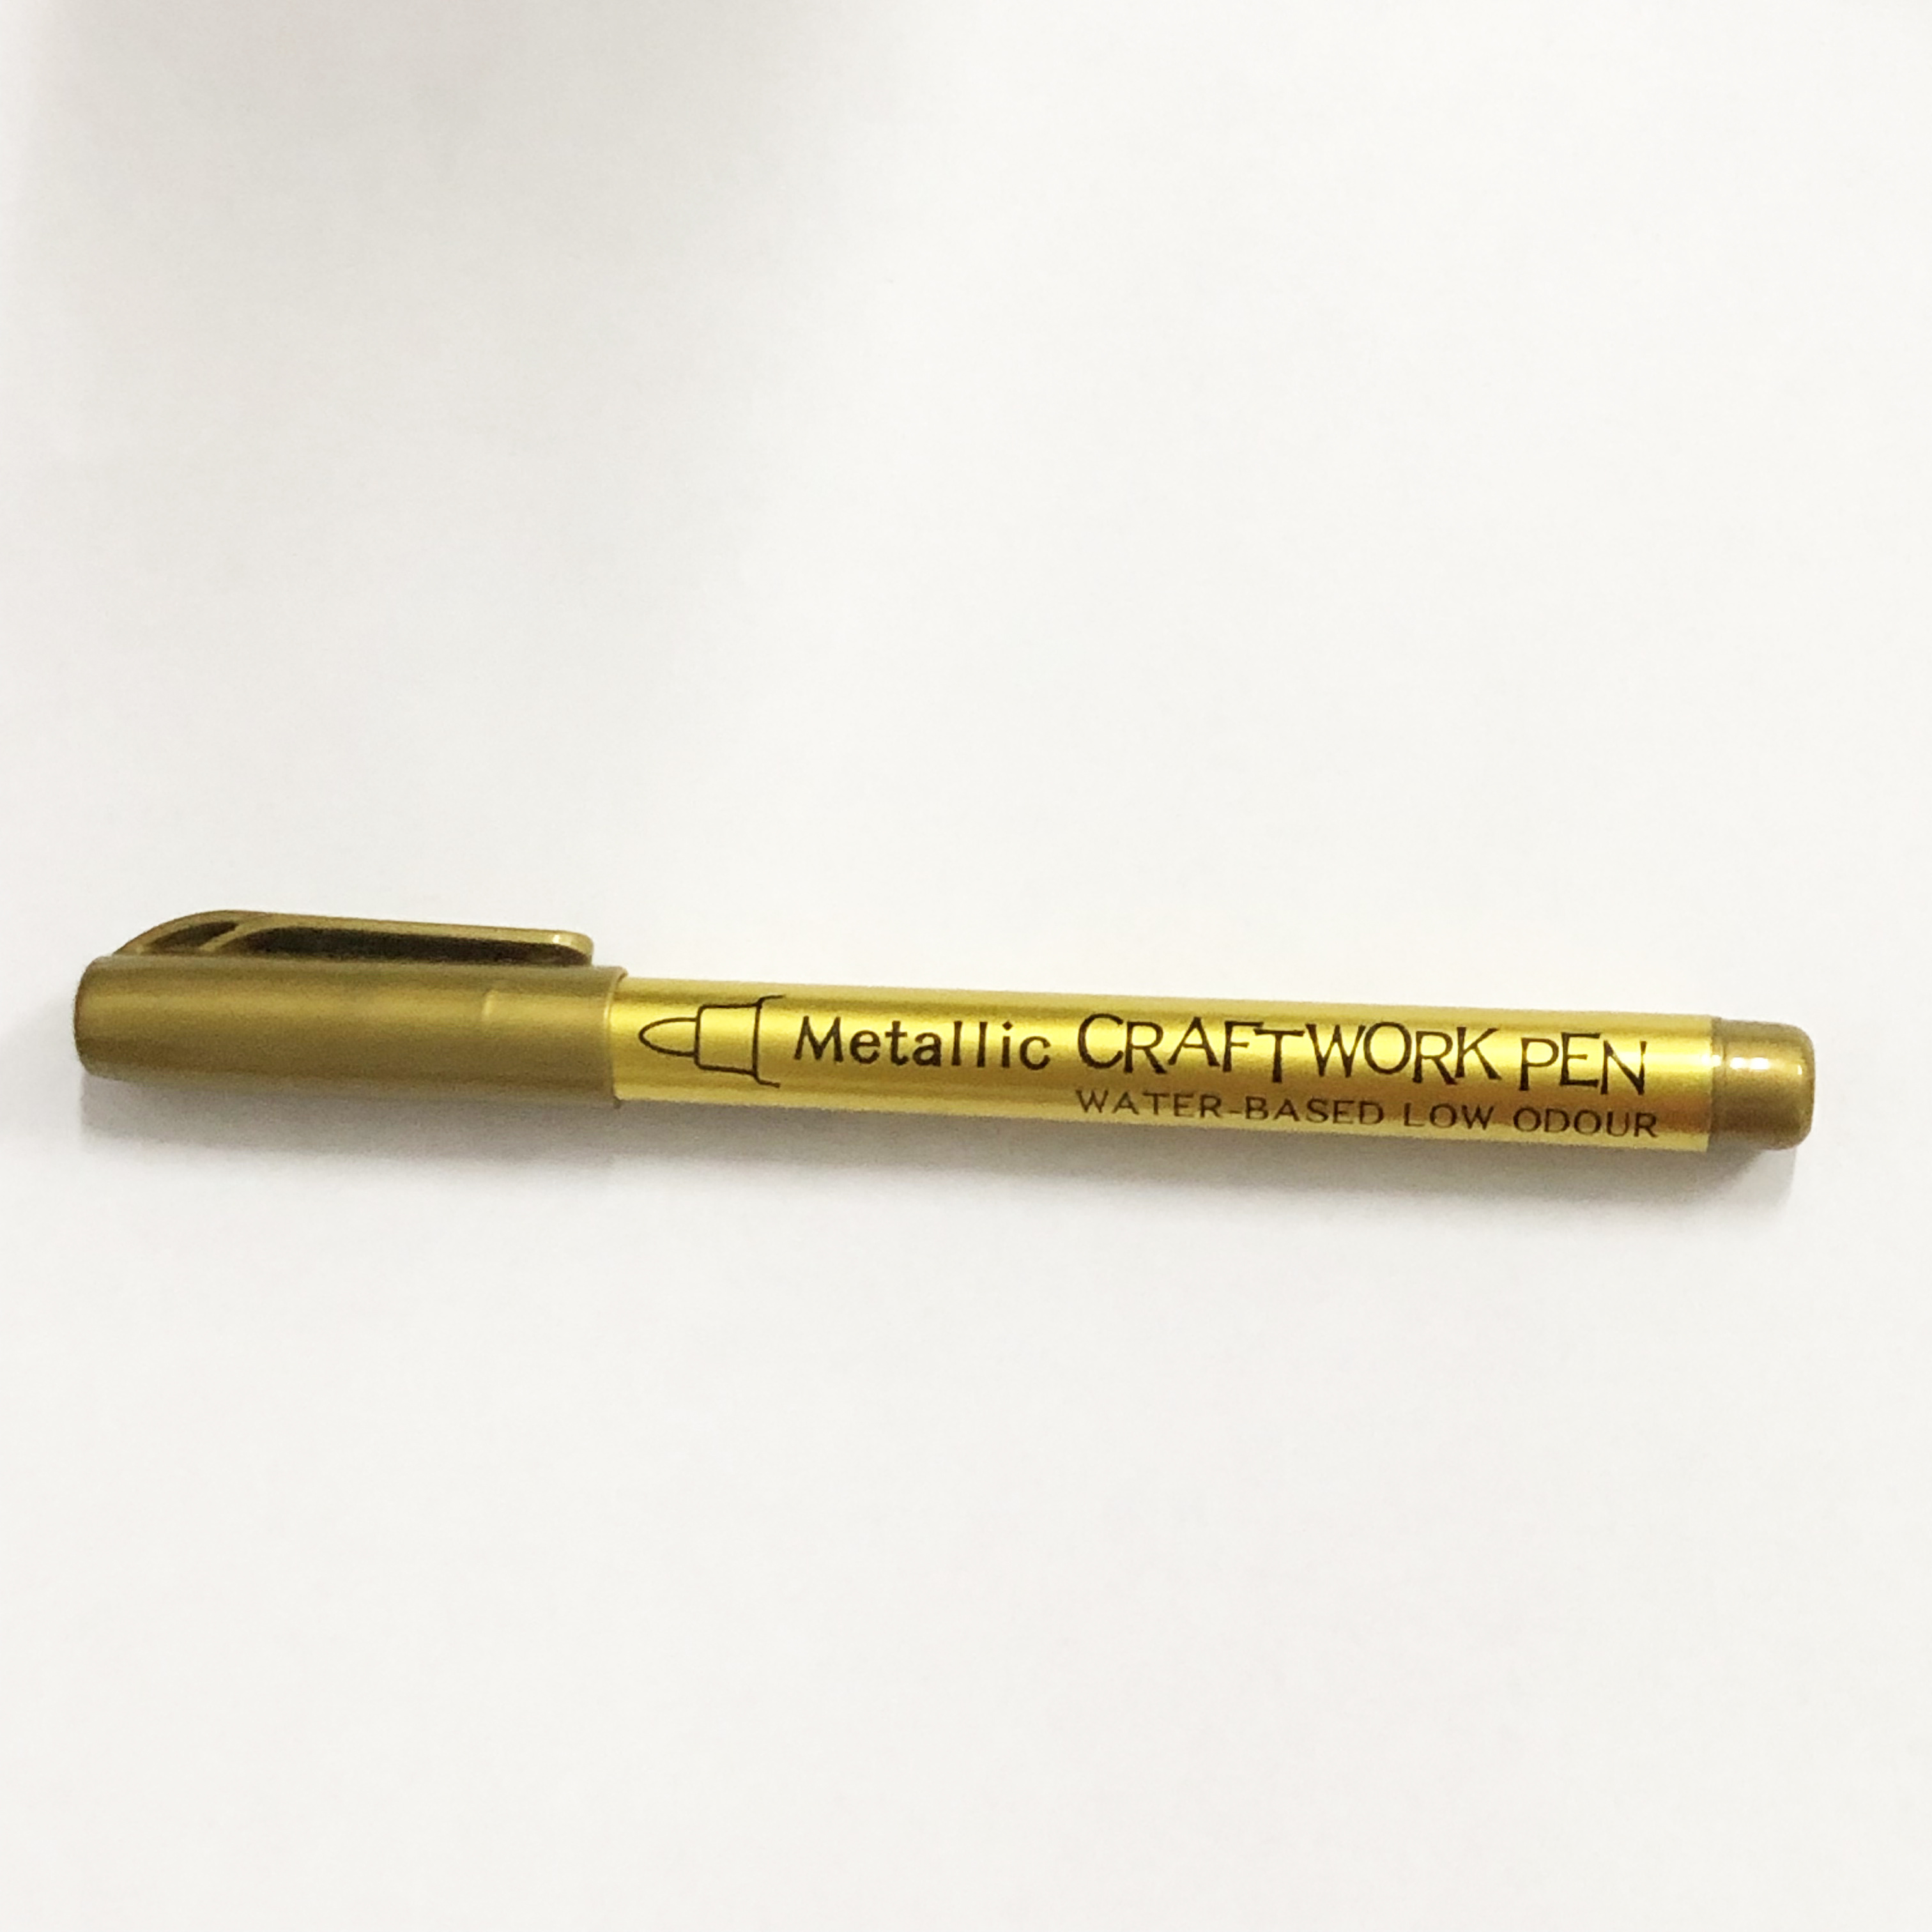  Marker Pens, Fluorescent Pen, Premium Resin Mold Pen, Metallic  Pen, DIY Epoxy Highlight Pen, Waterproof Ink Paint Pens(Gold)